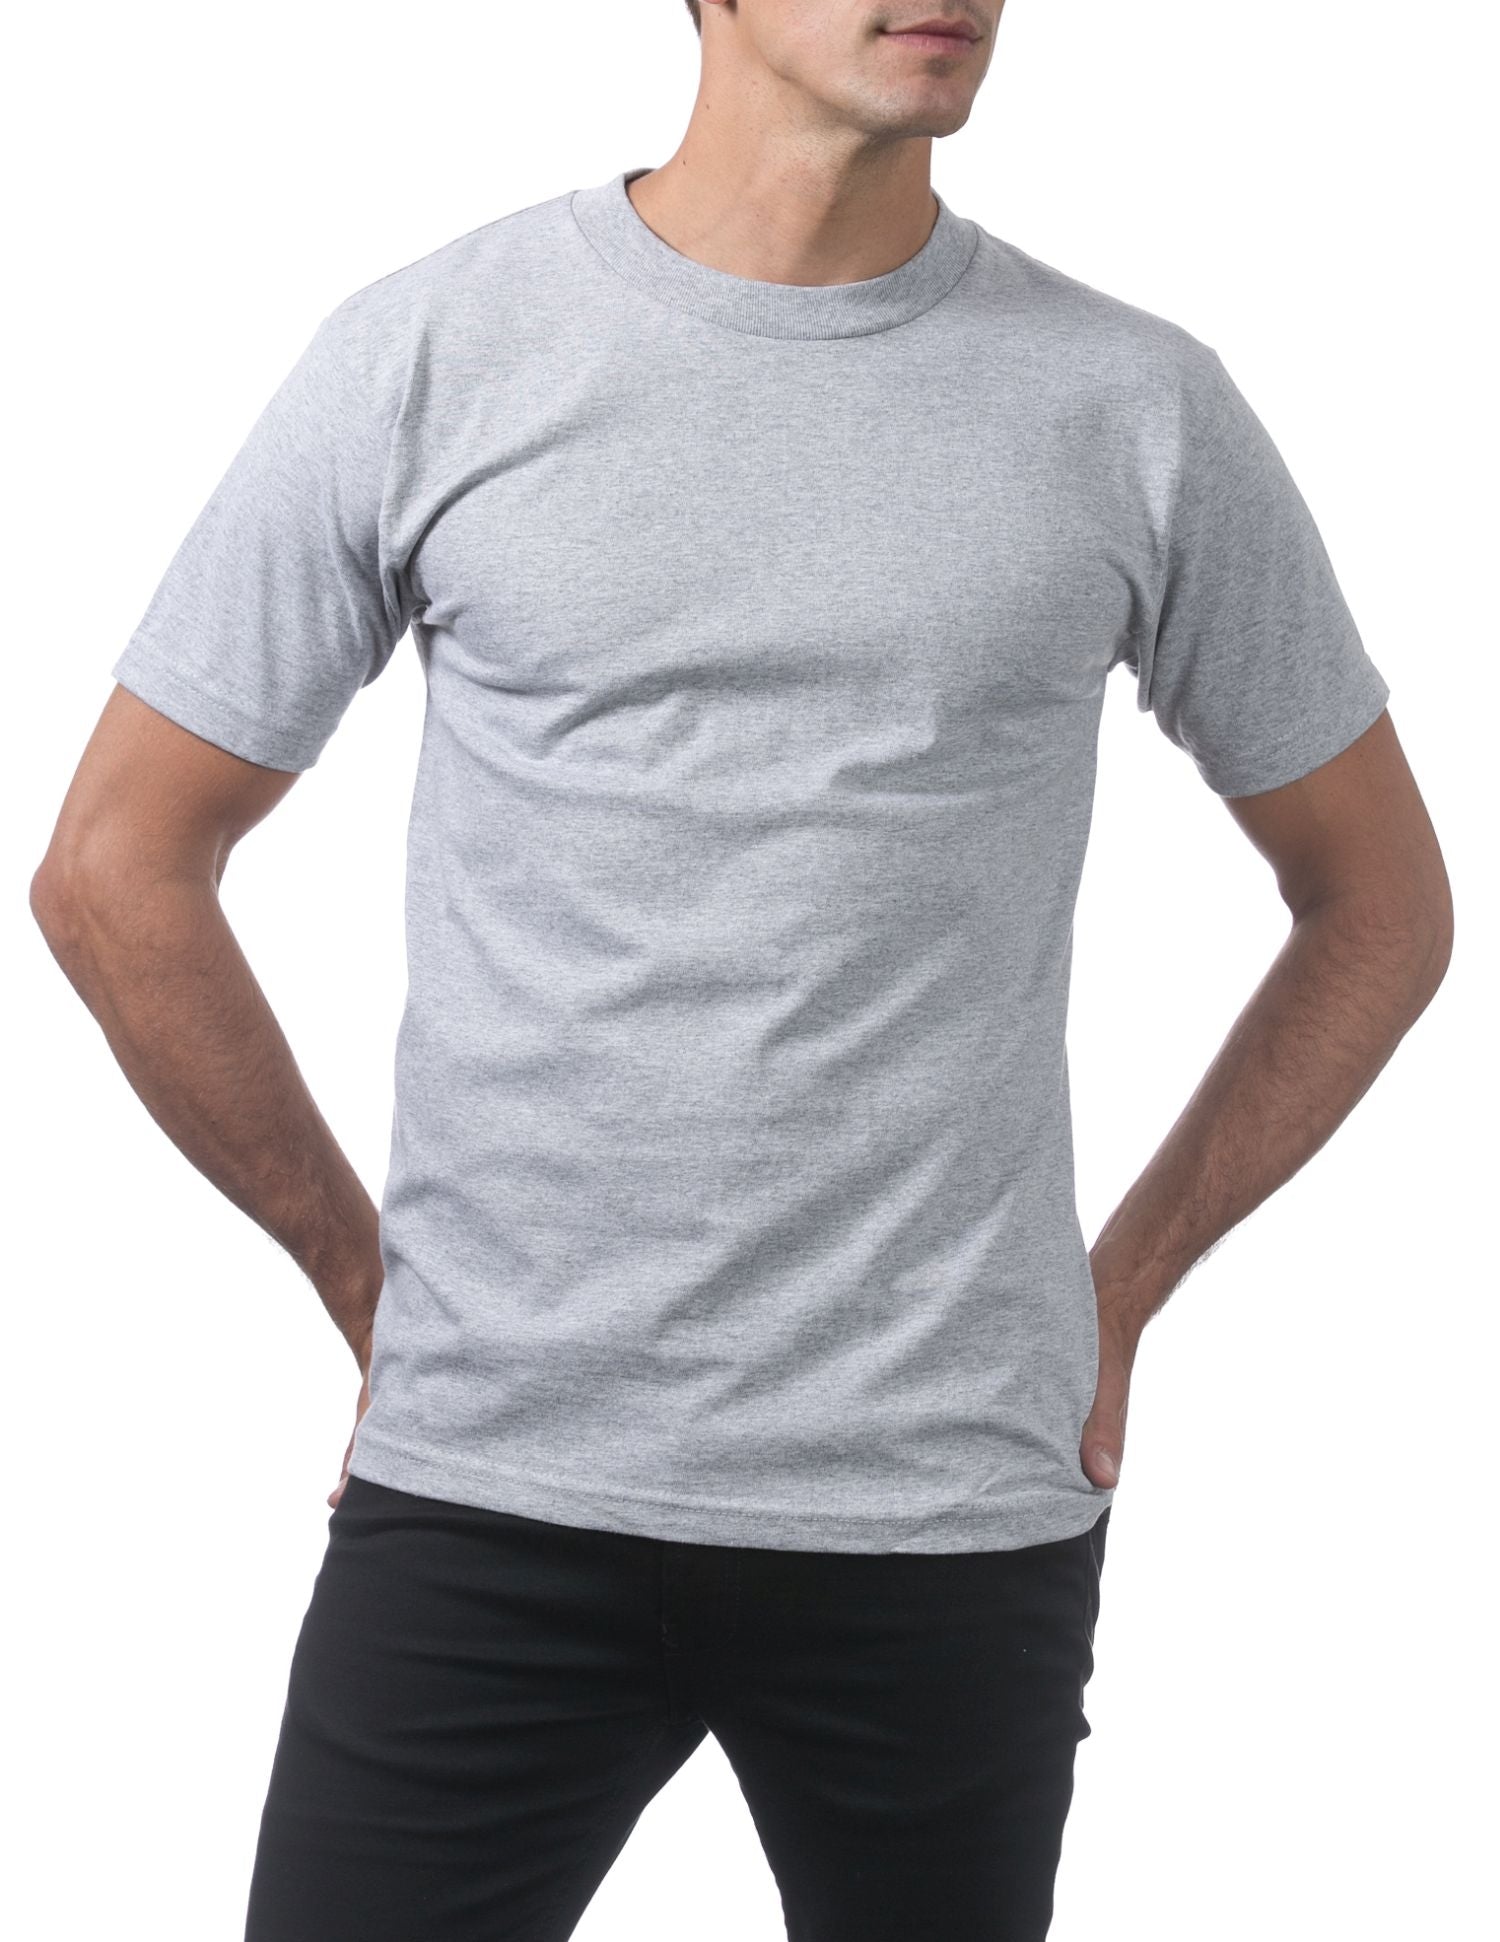 Pro Club Men's Comfort Cotton Short Sleeve T-Shirt - Heather Gray - Small - Pro-Distributing